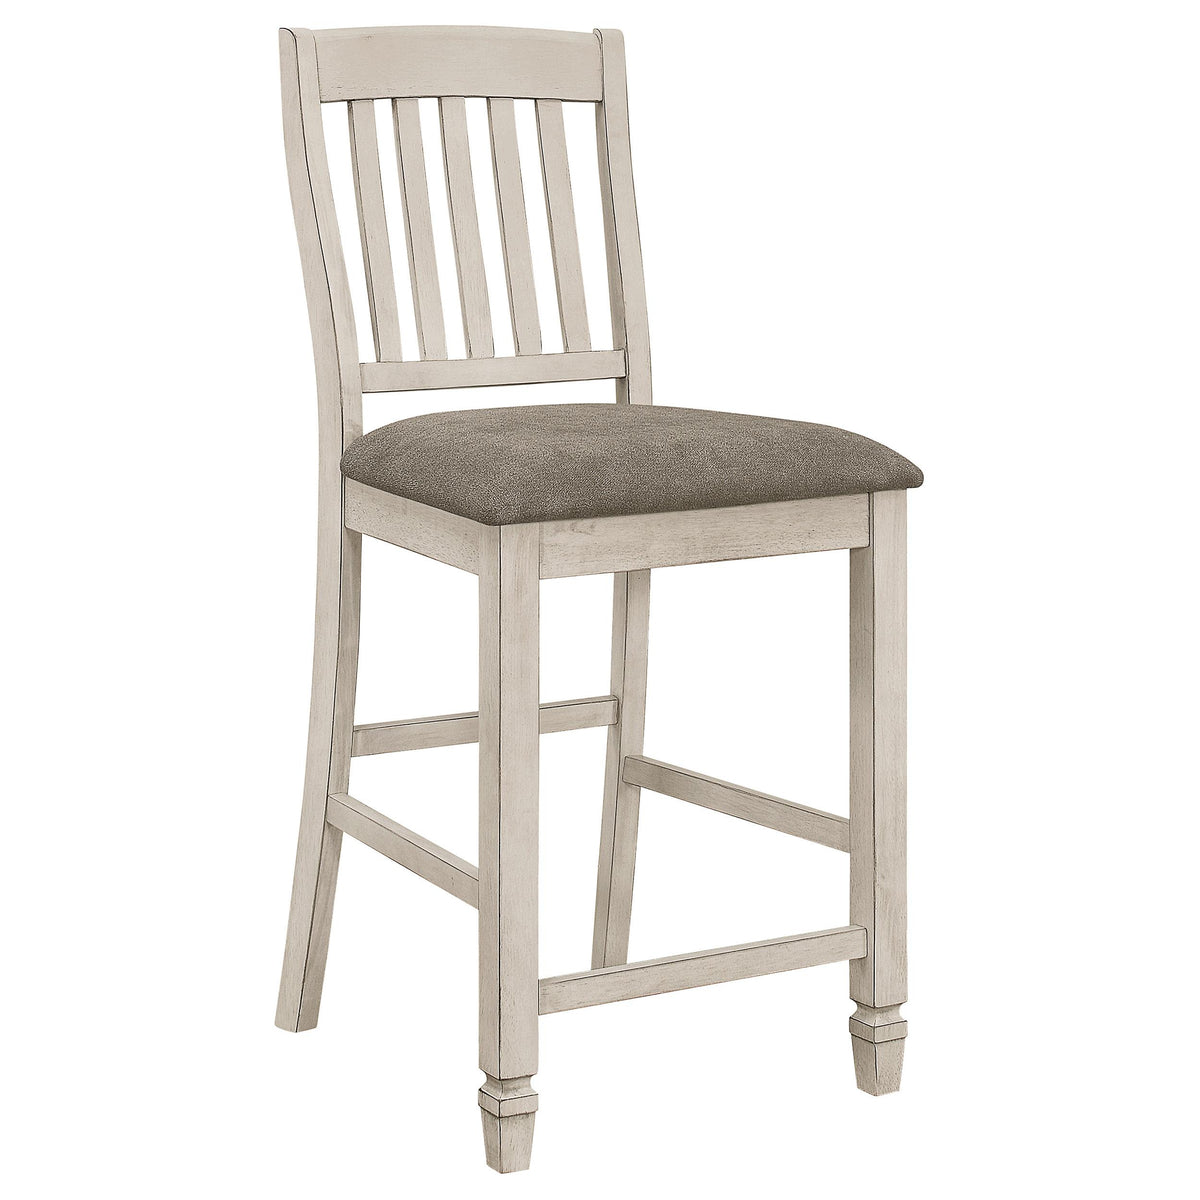 Sarasota Slat Back Counter Height Chairs Grey and Rustic Cream (Set of 2)  Half Price Furniture